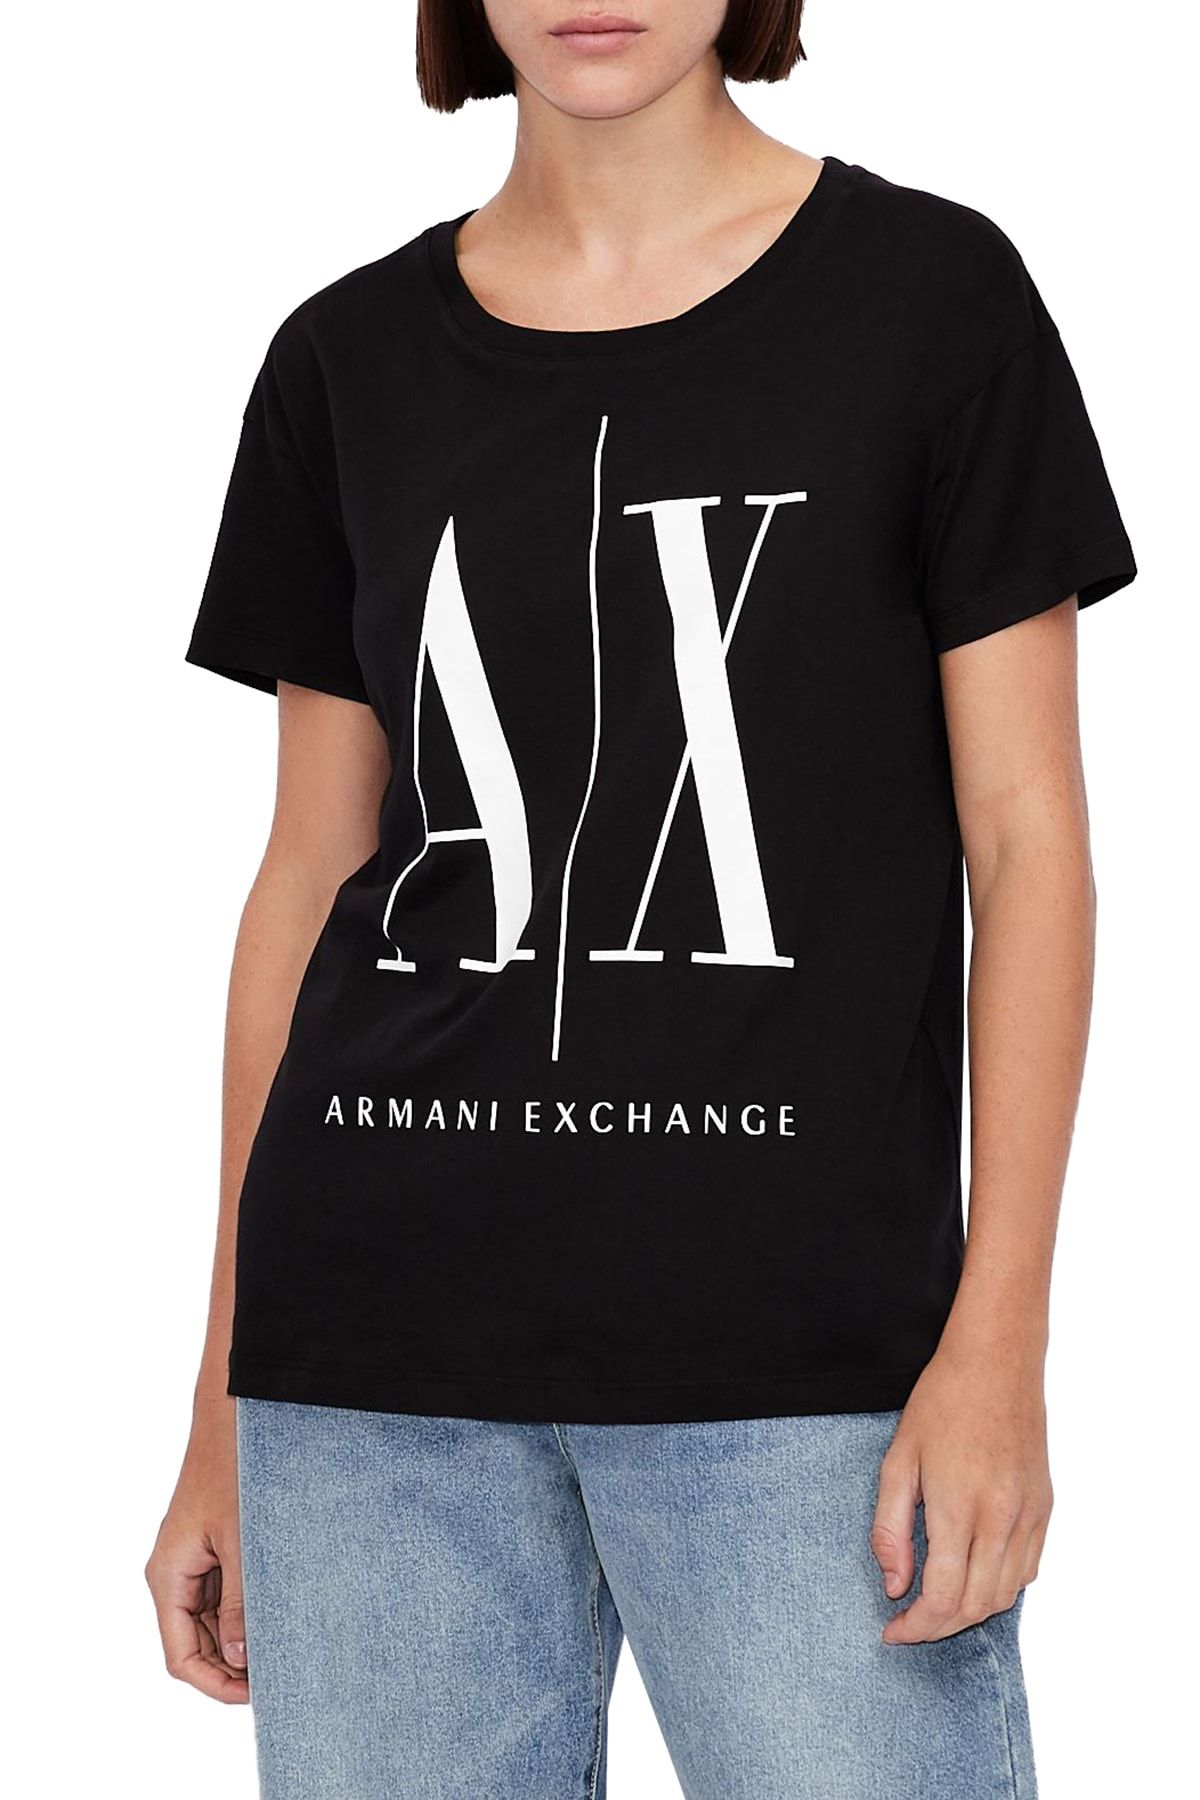 Armani Exchange Kadın Pamuklu T Shirt   8nytcx Yjg3z 1200